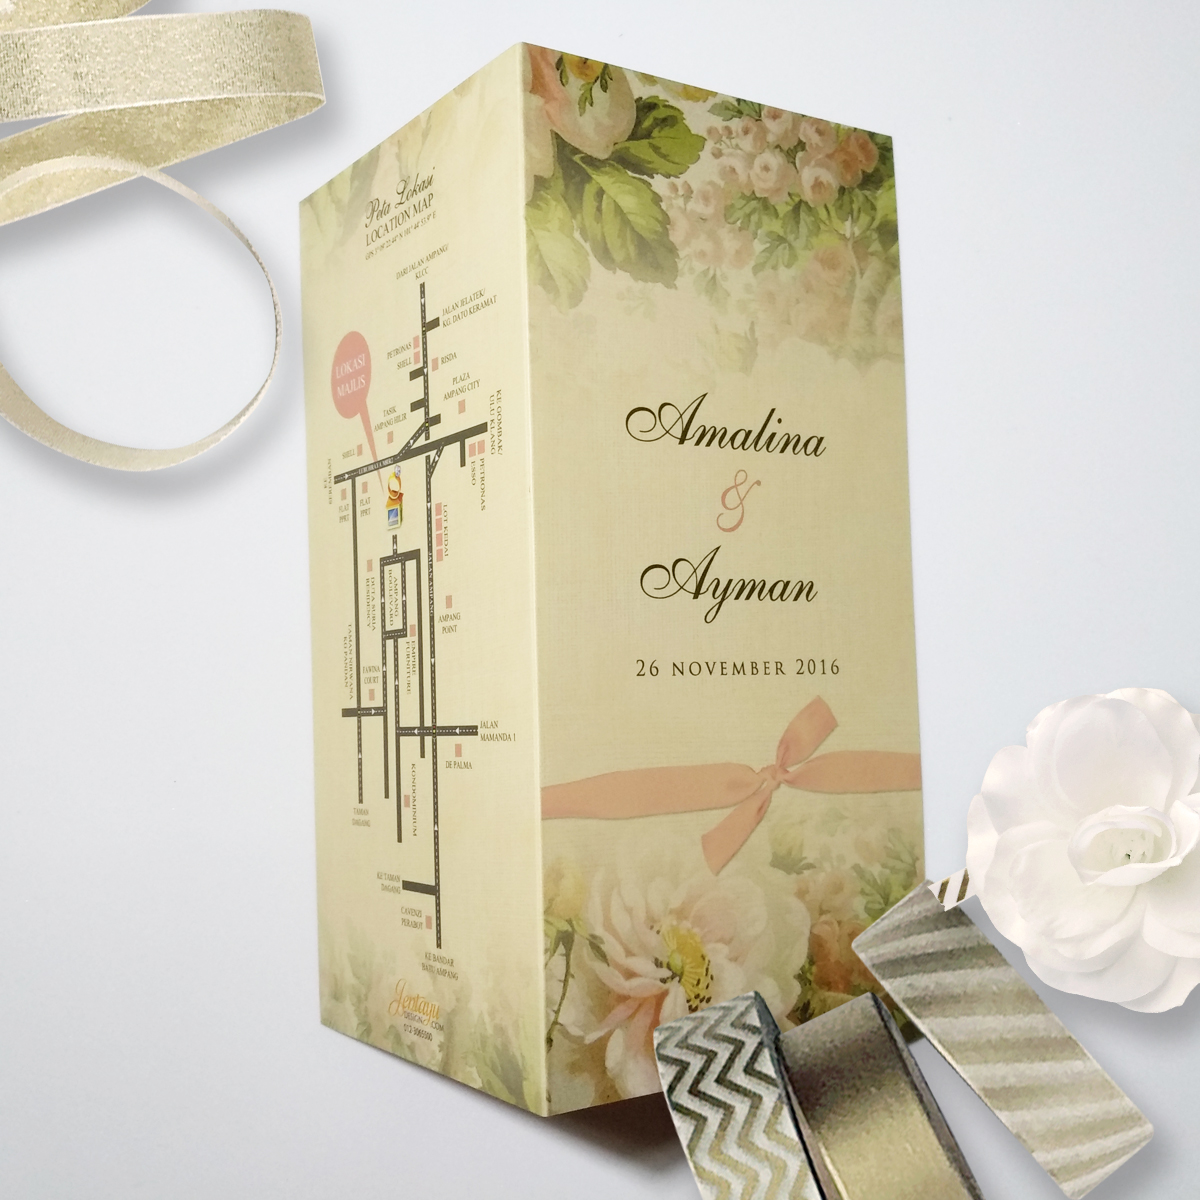 jentayu design kad kahwin warna penuh berlipat 2DL 4x8 full colour color folded wedding cards malaysia romance A